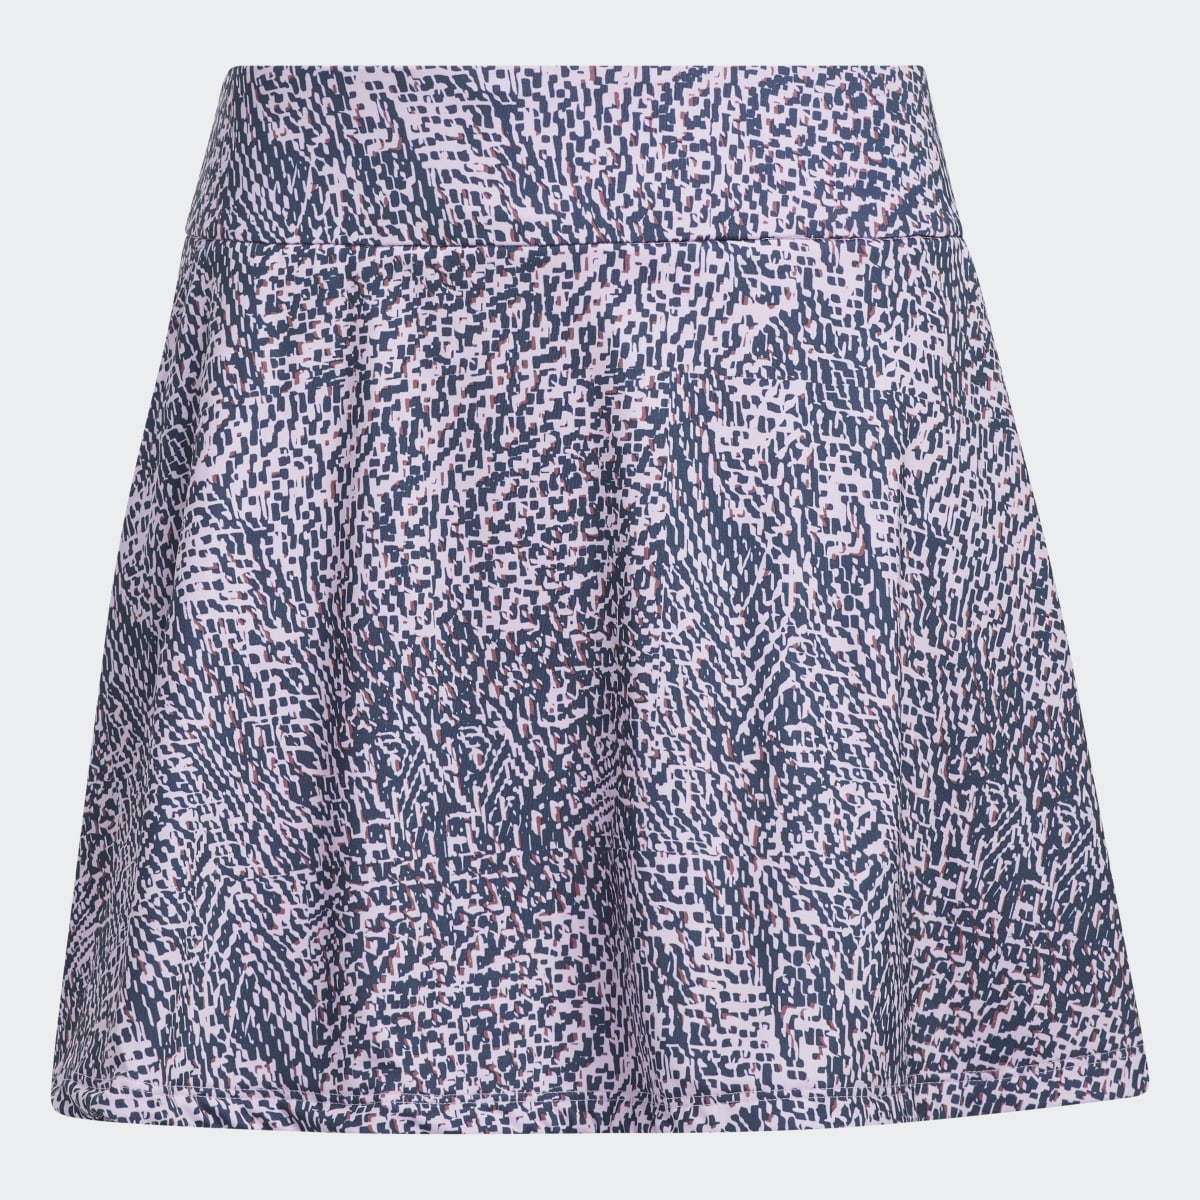 Adidas Printed Frill Golf Skirt. 4